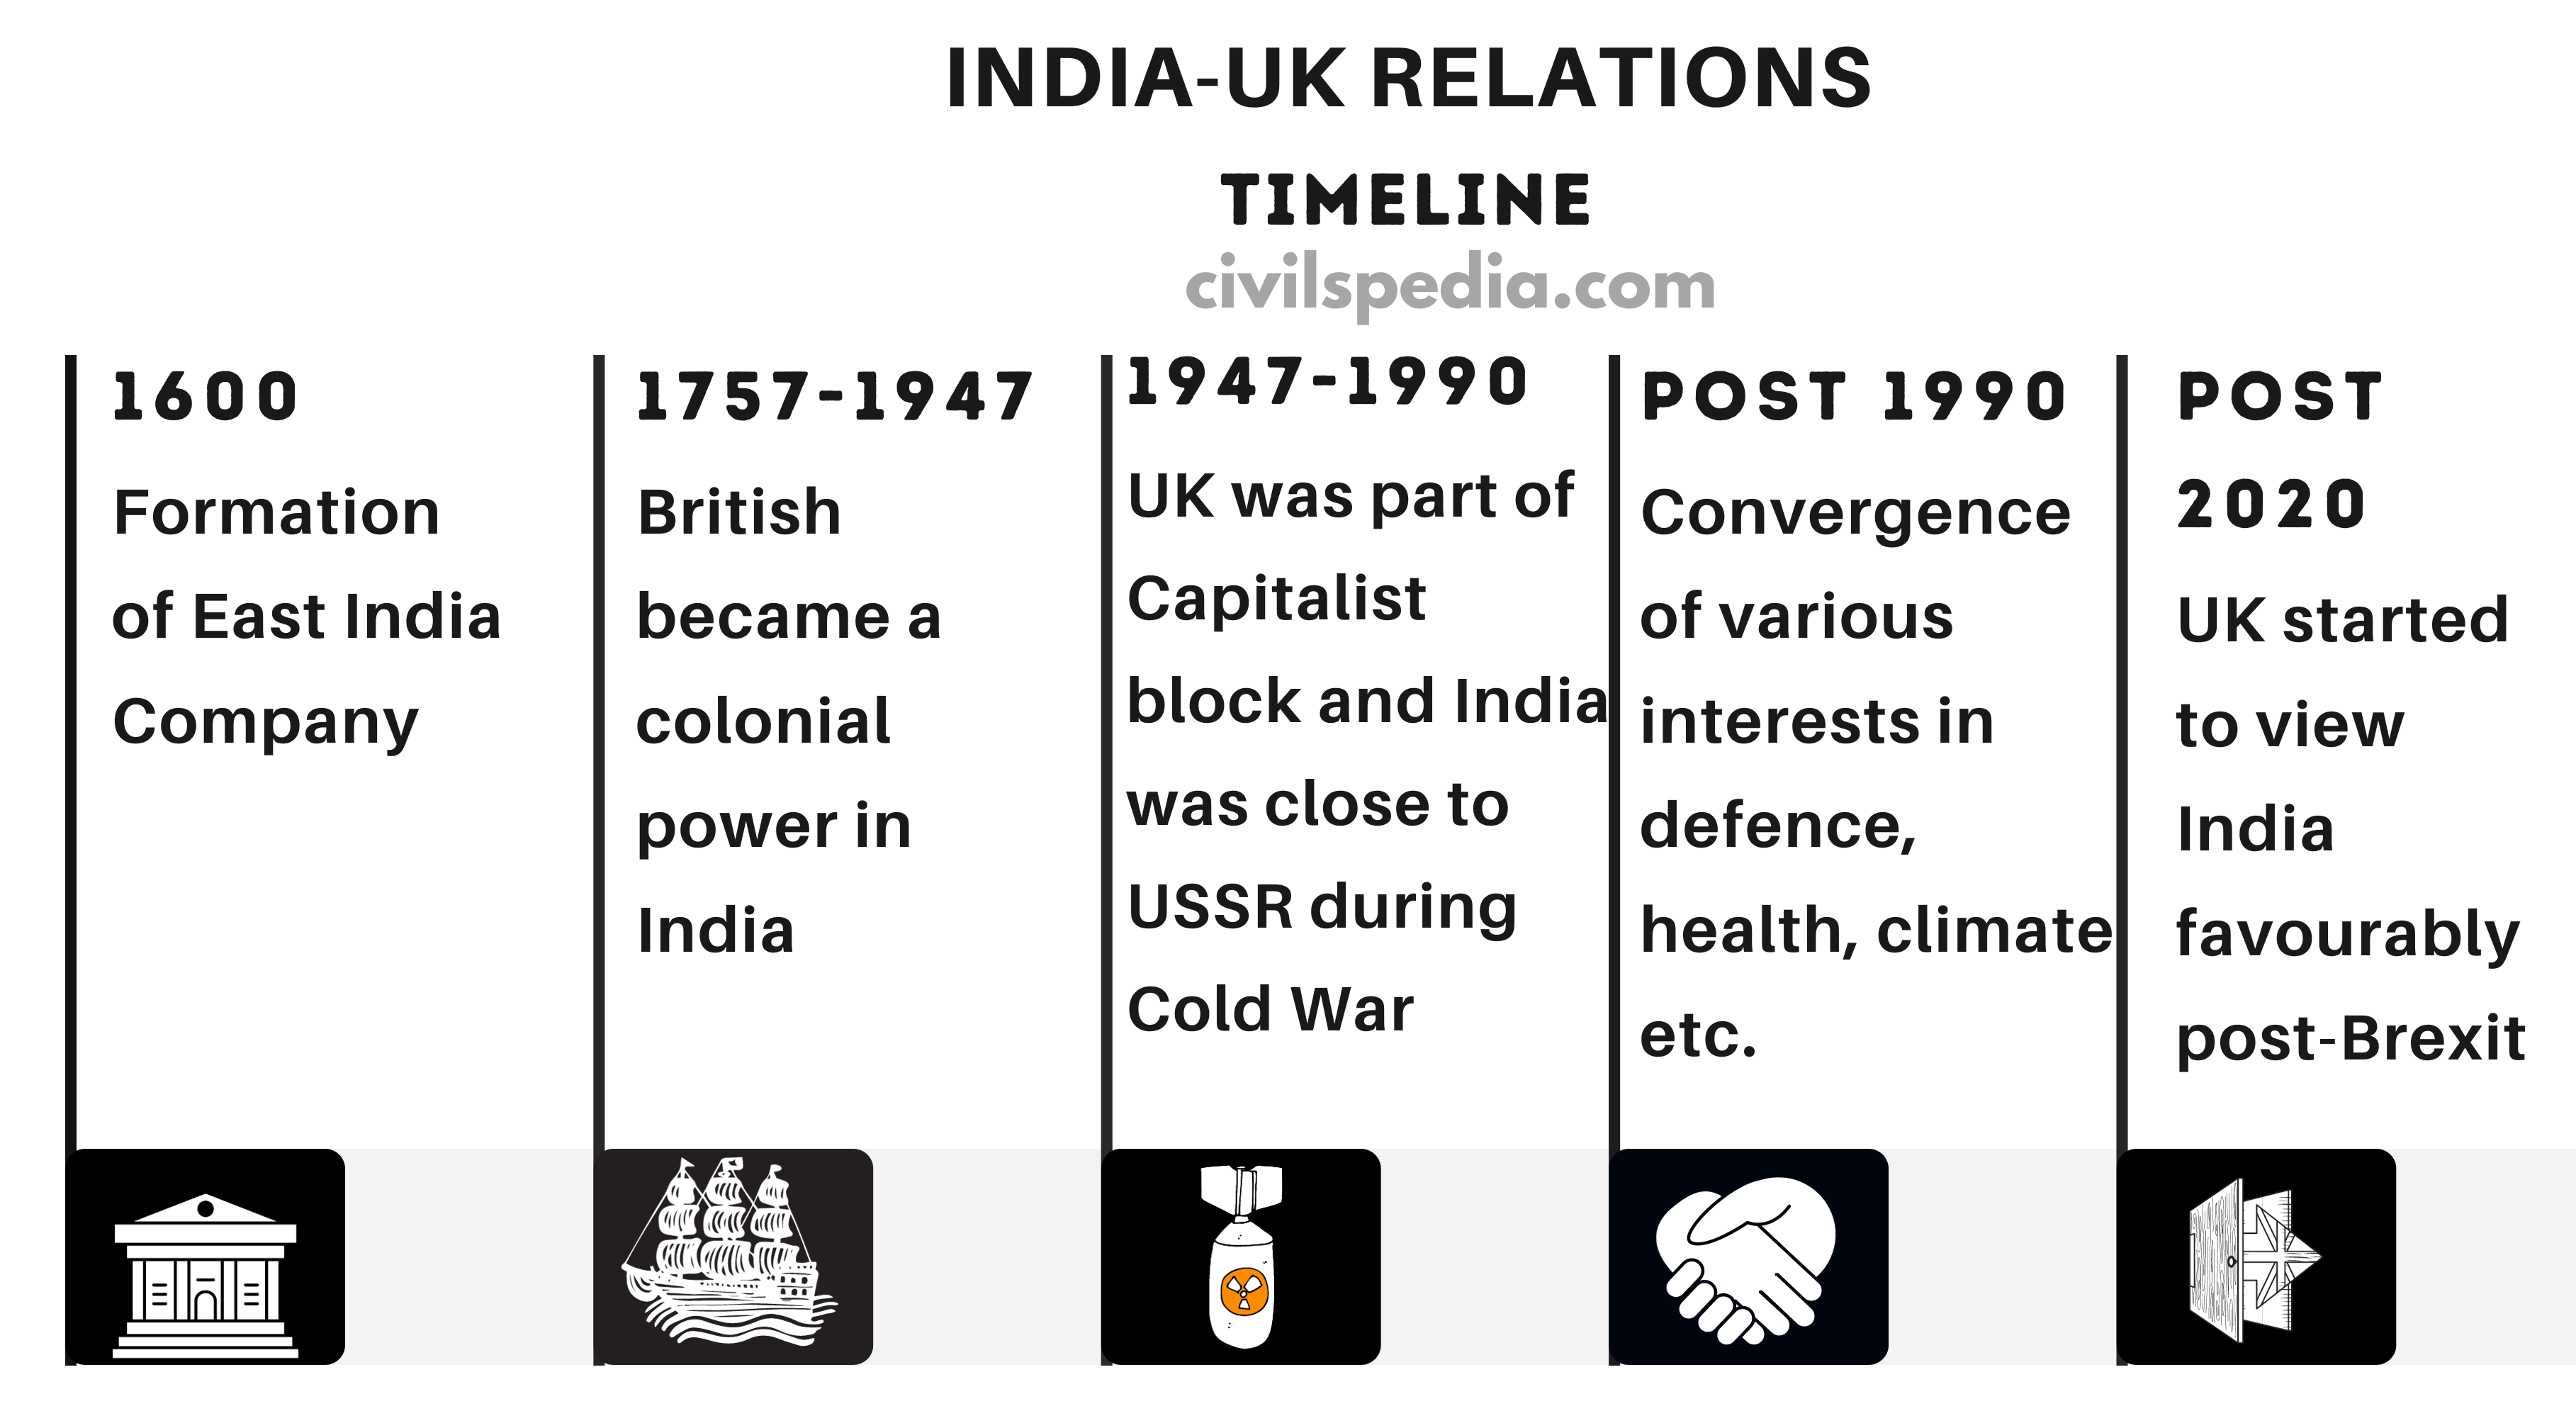 Timeline of India-UK Relations 